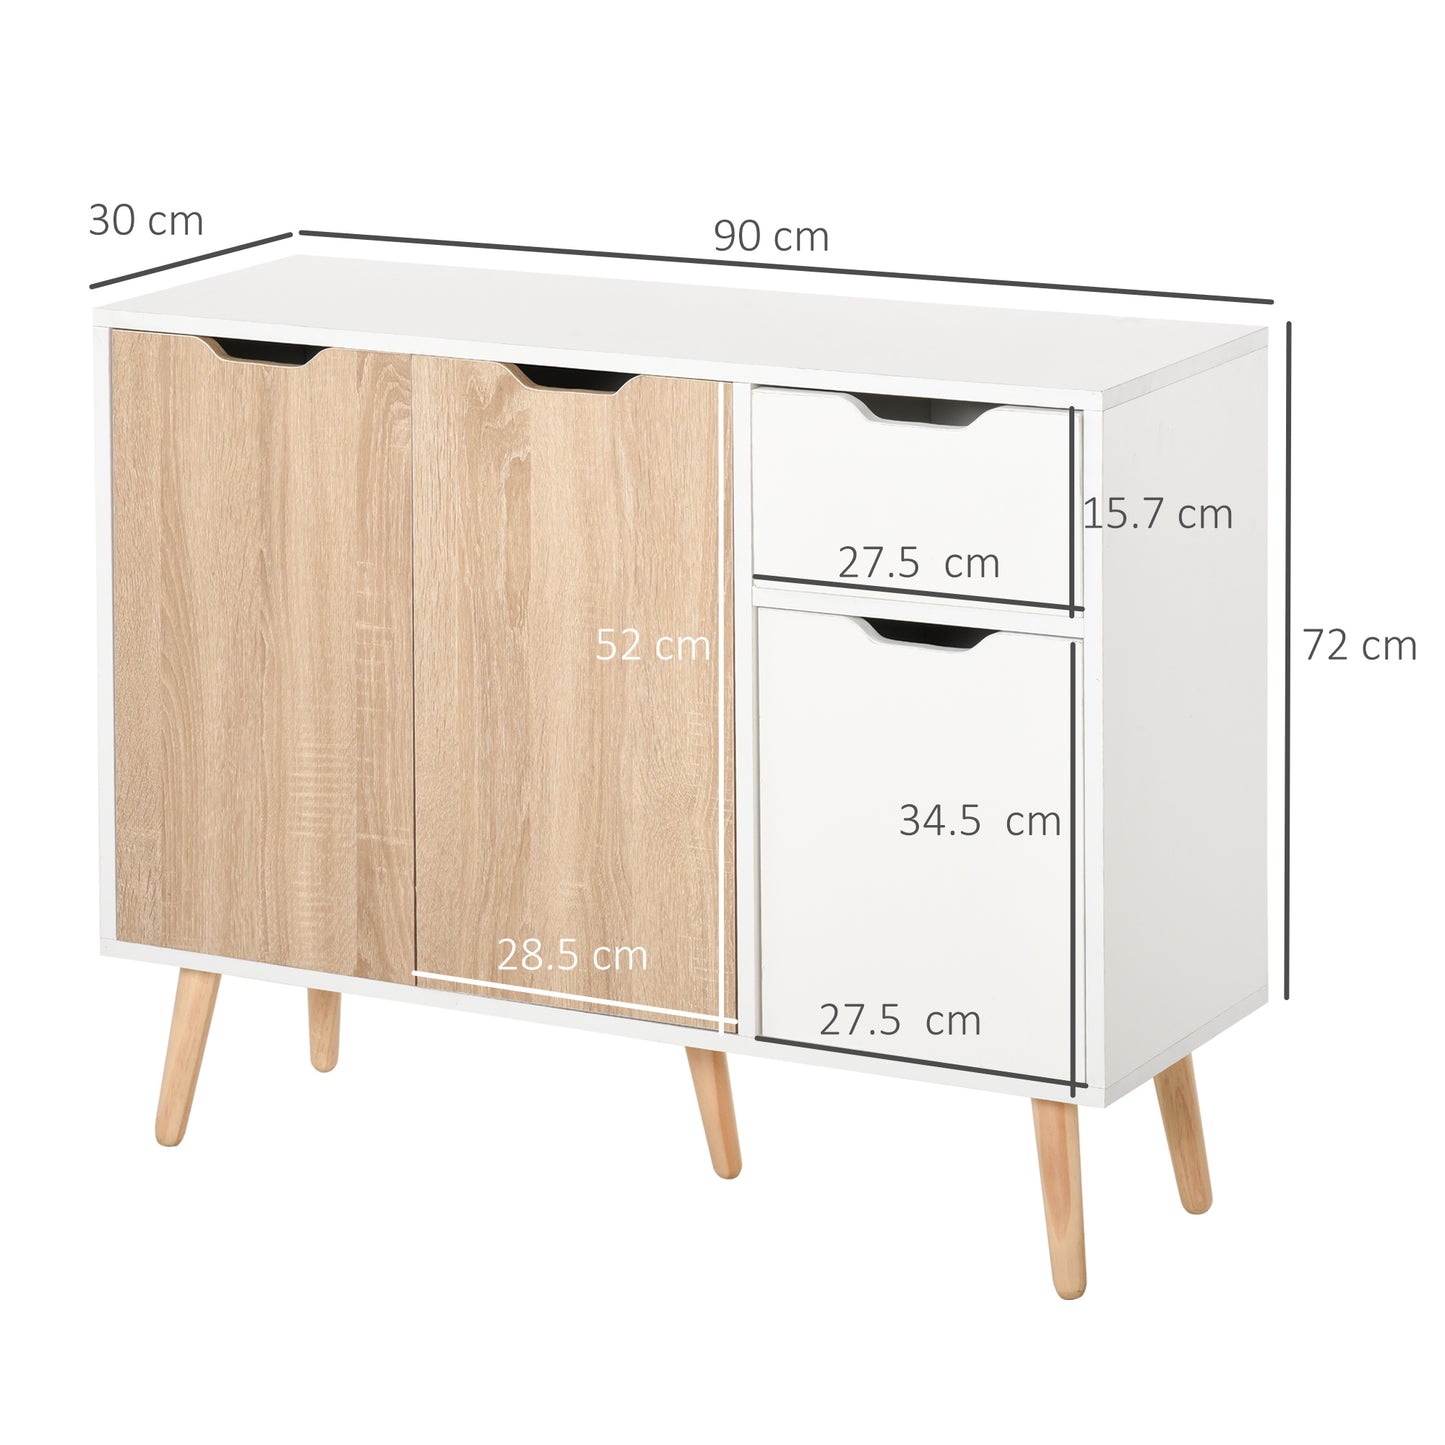 HOMCOM Storage Cabinet Floor Standing Sideboard with Drawer for Bedroom, Living Room, Home Office, Natural Kitchen, Room